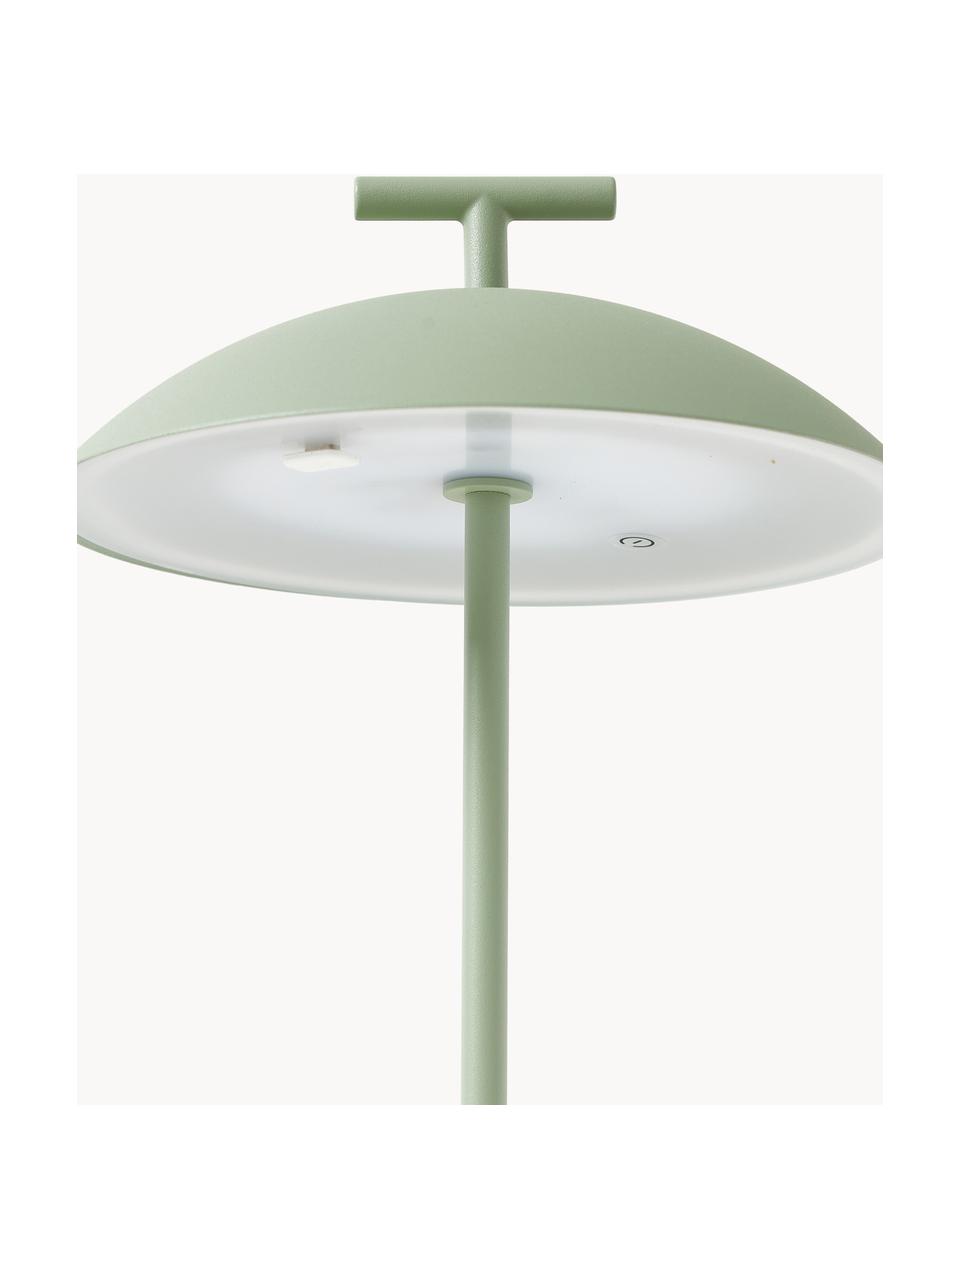 Lampada da tavolo portatile a LED da interno-esterno Mini Geen-A, luce regolabile, Metallo verniciato a polvere, Verde salvia, Ø 20 x Alt. 36 cm